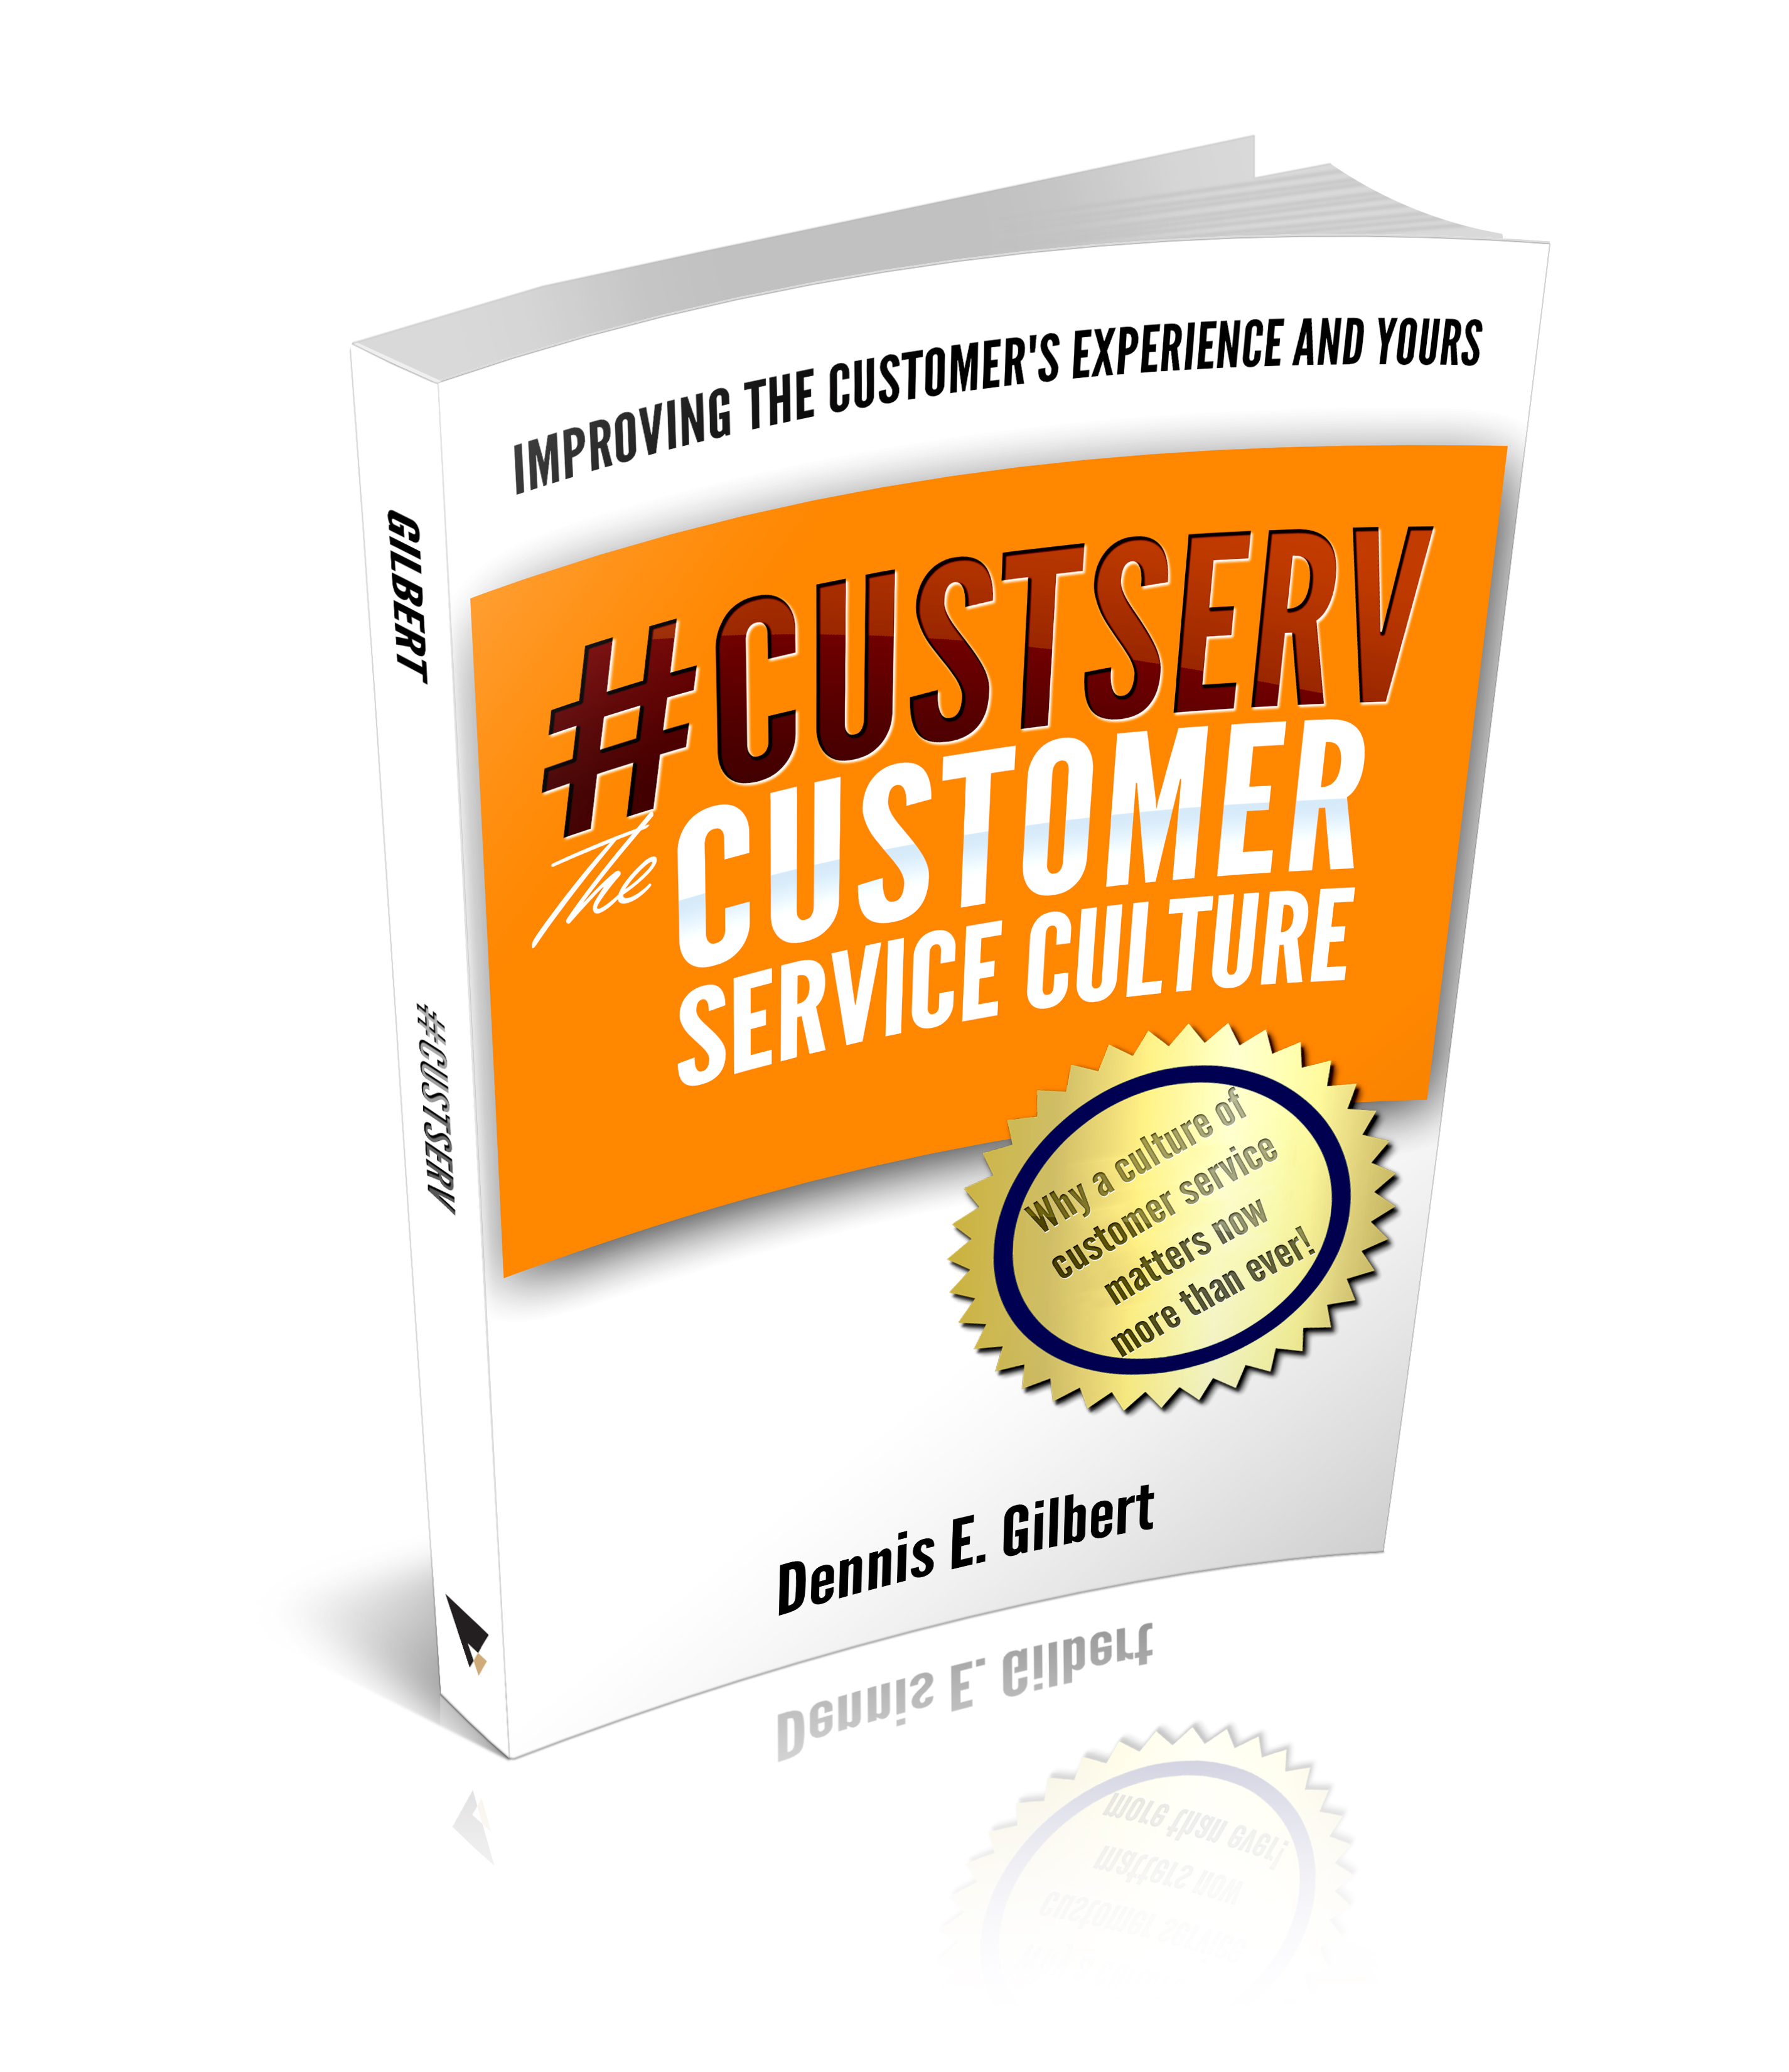 #CustServ The Customer Service Culture